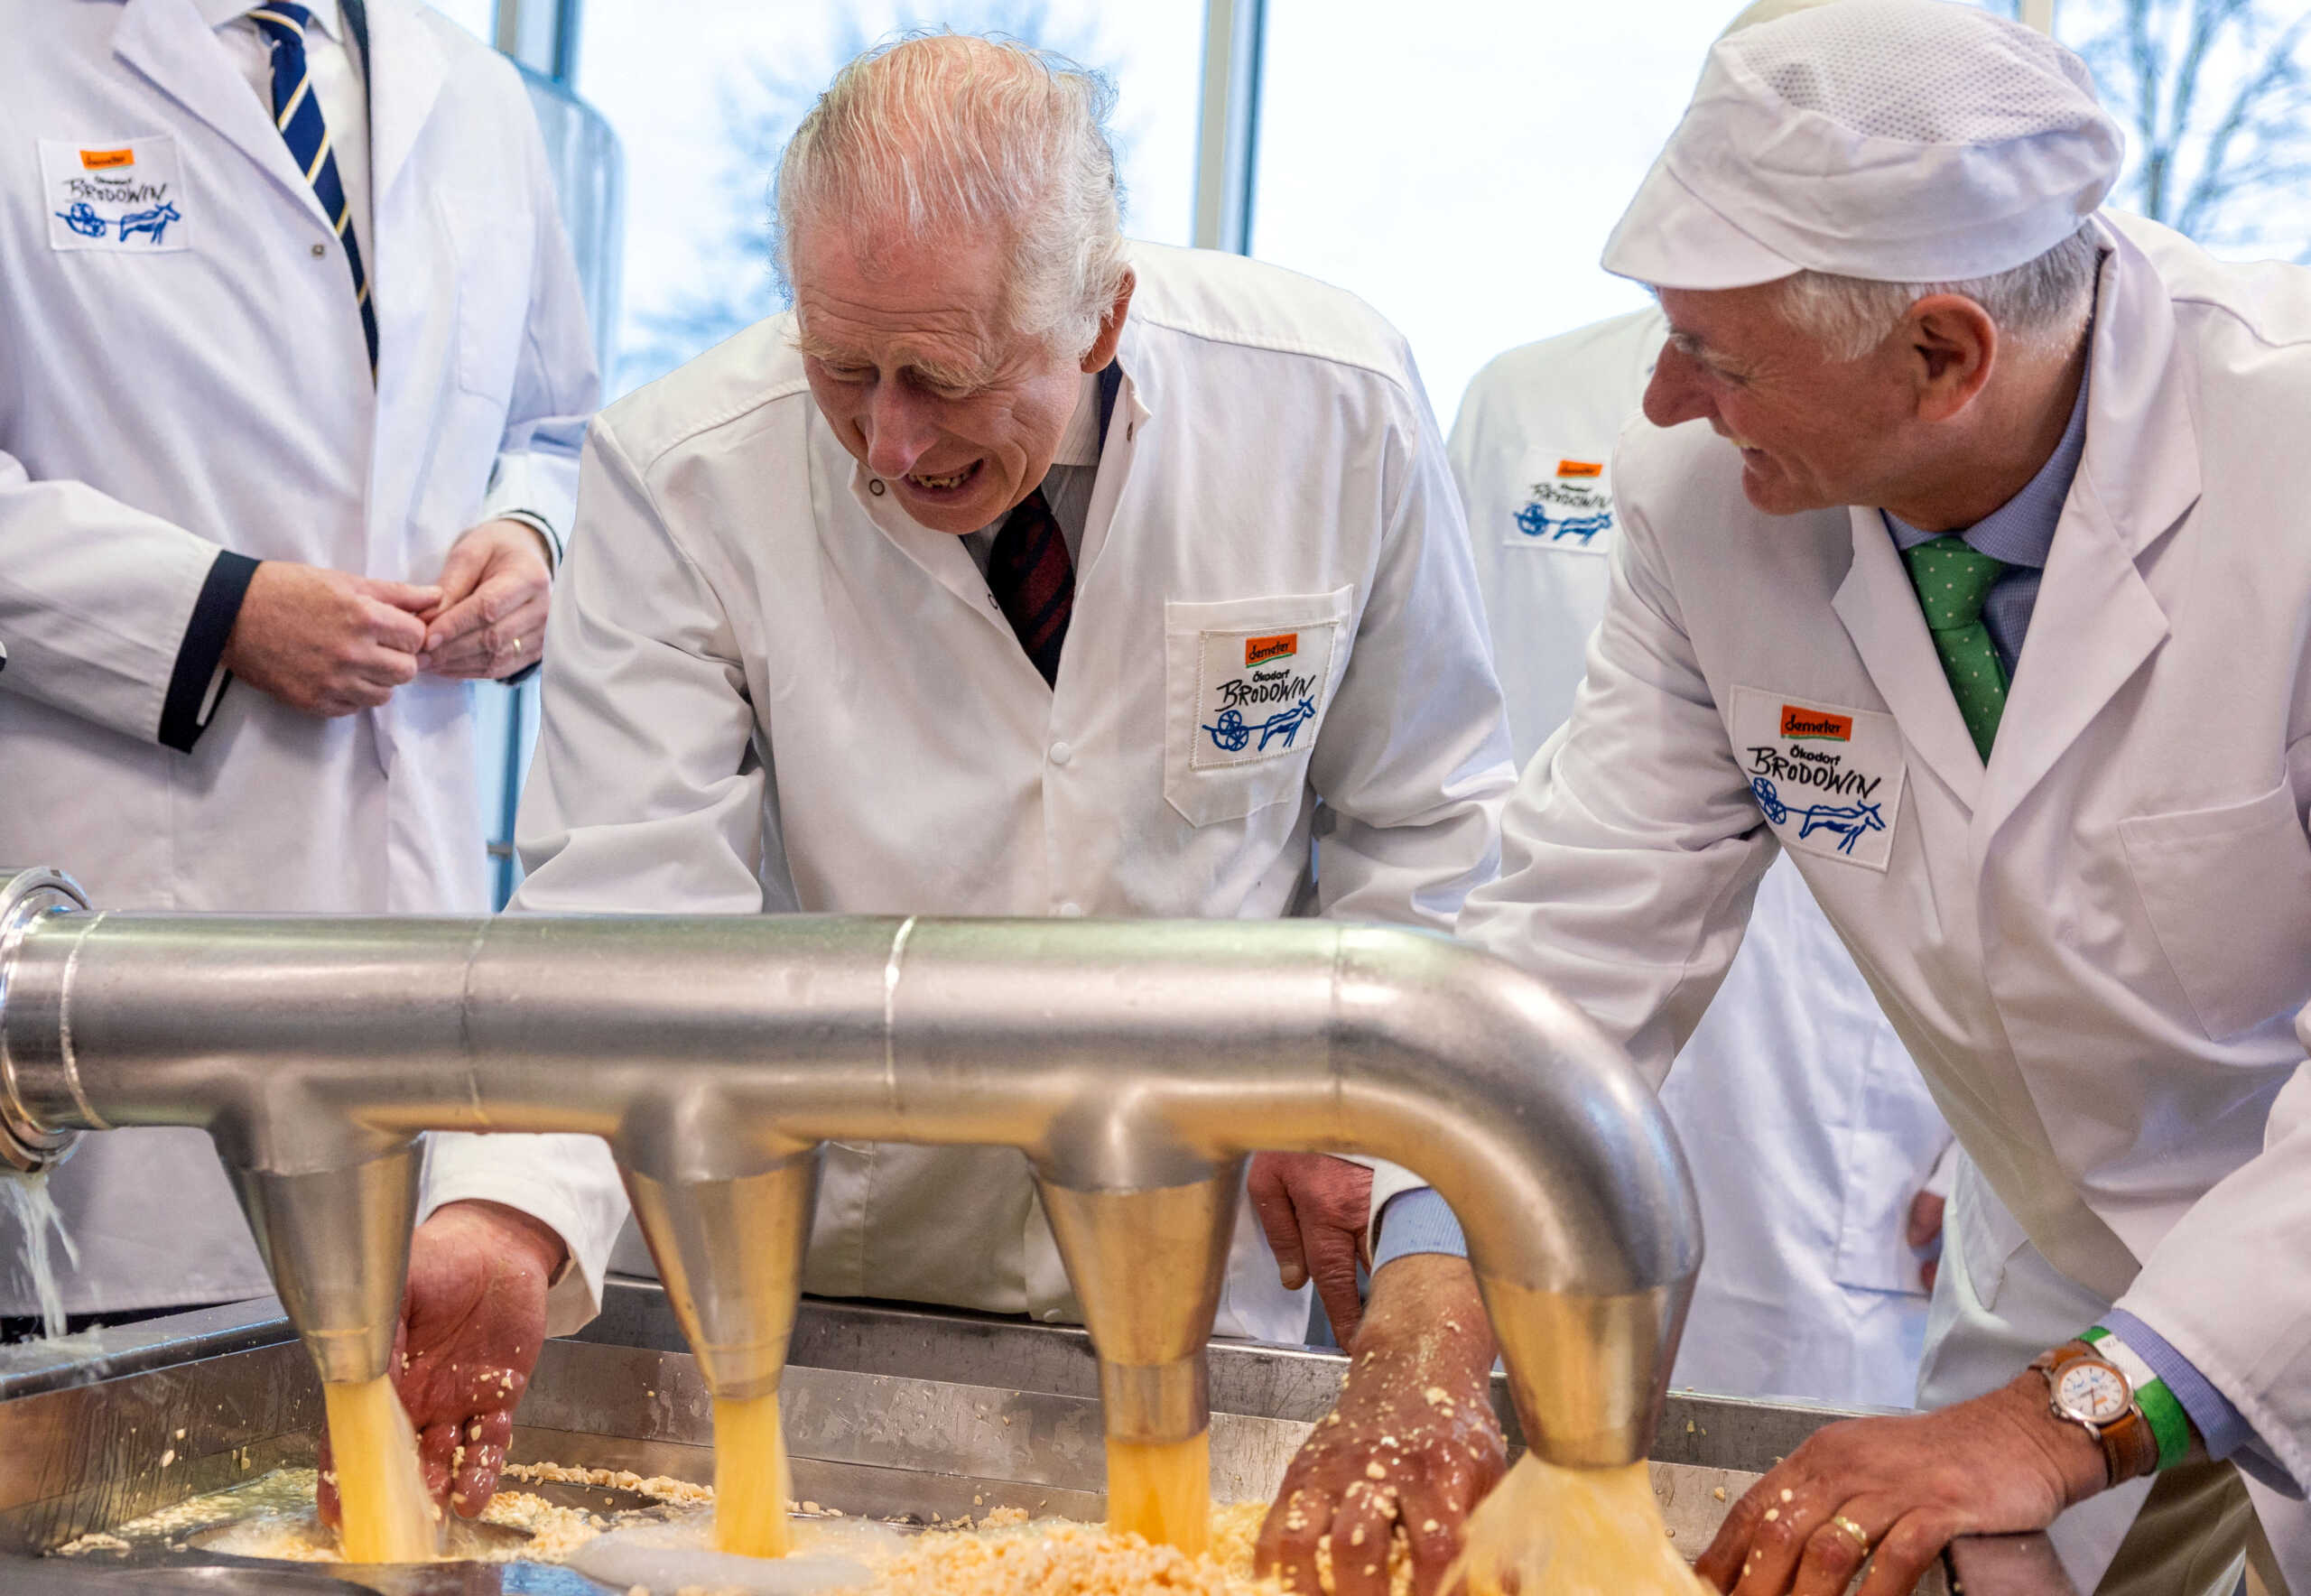 O βασιλιάς Κάρολος στην Γερμανία έκανε και τον τυροκόμο – Βίντεο τον δείχνει να «πήζει» τυρί σε φάρμα